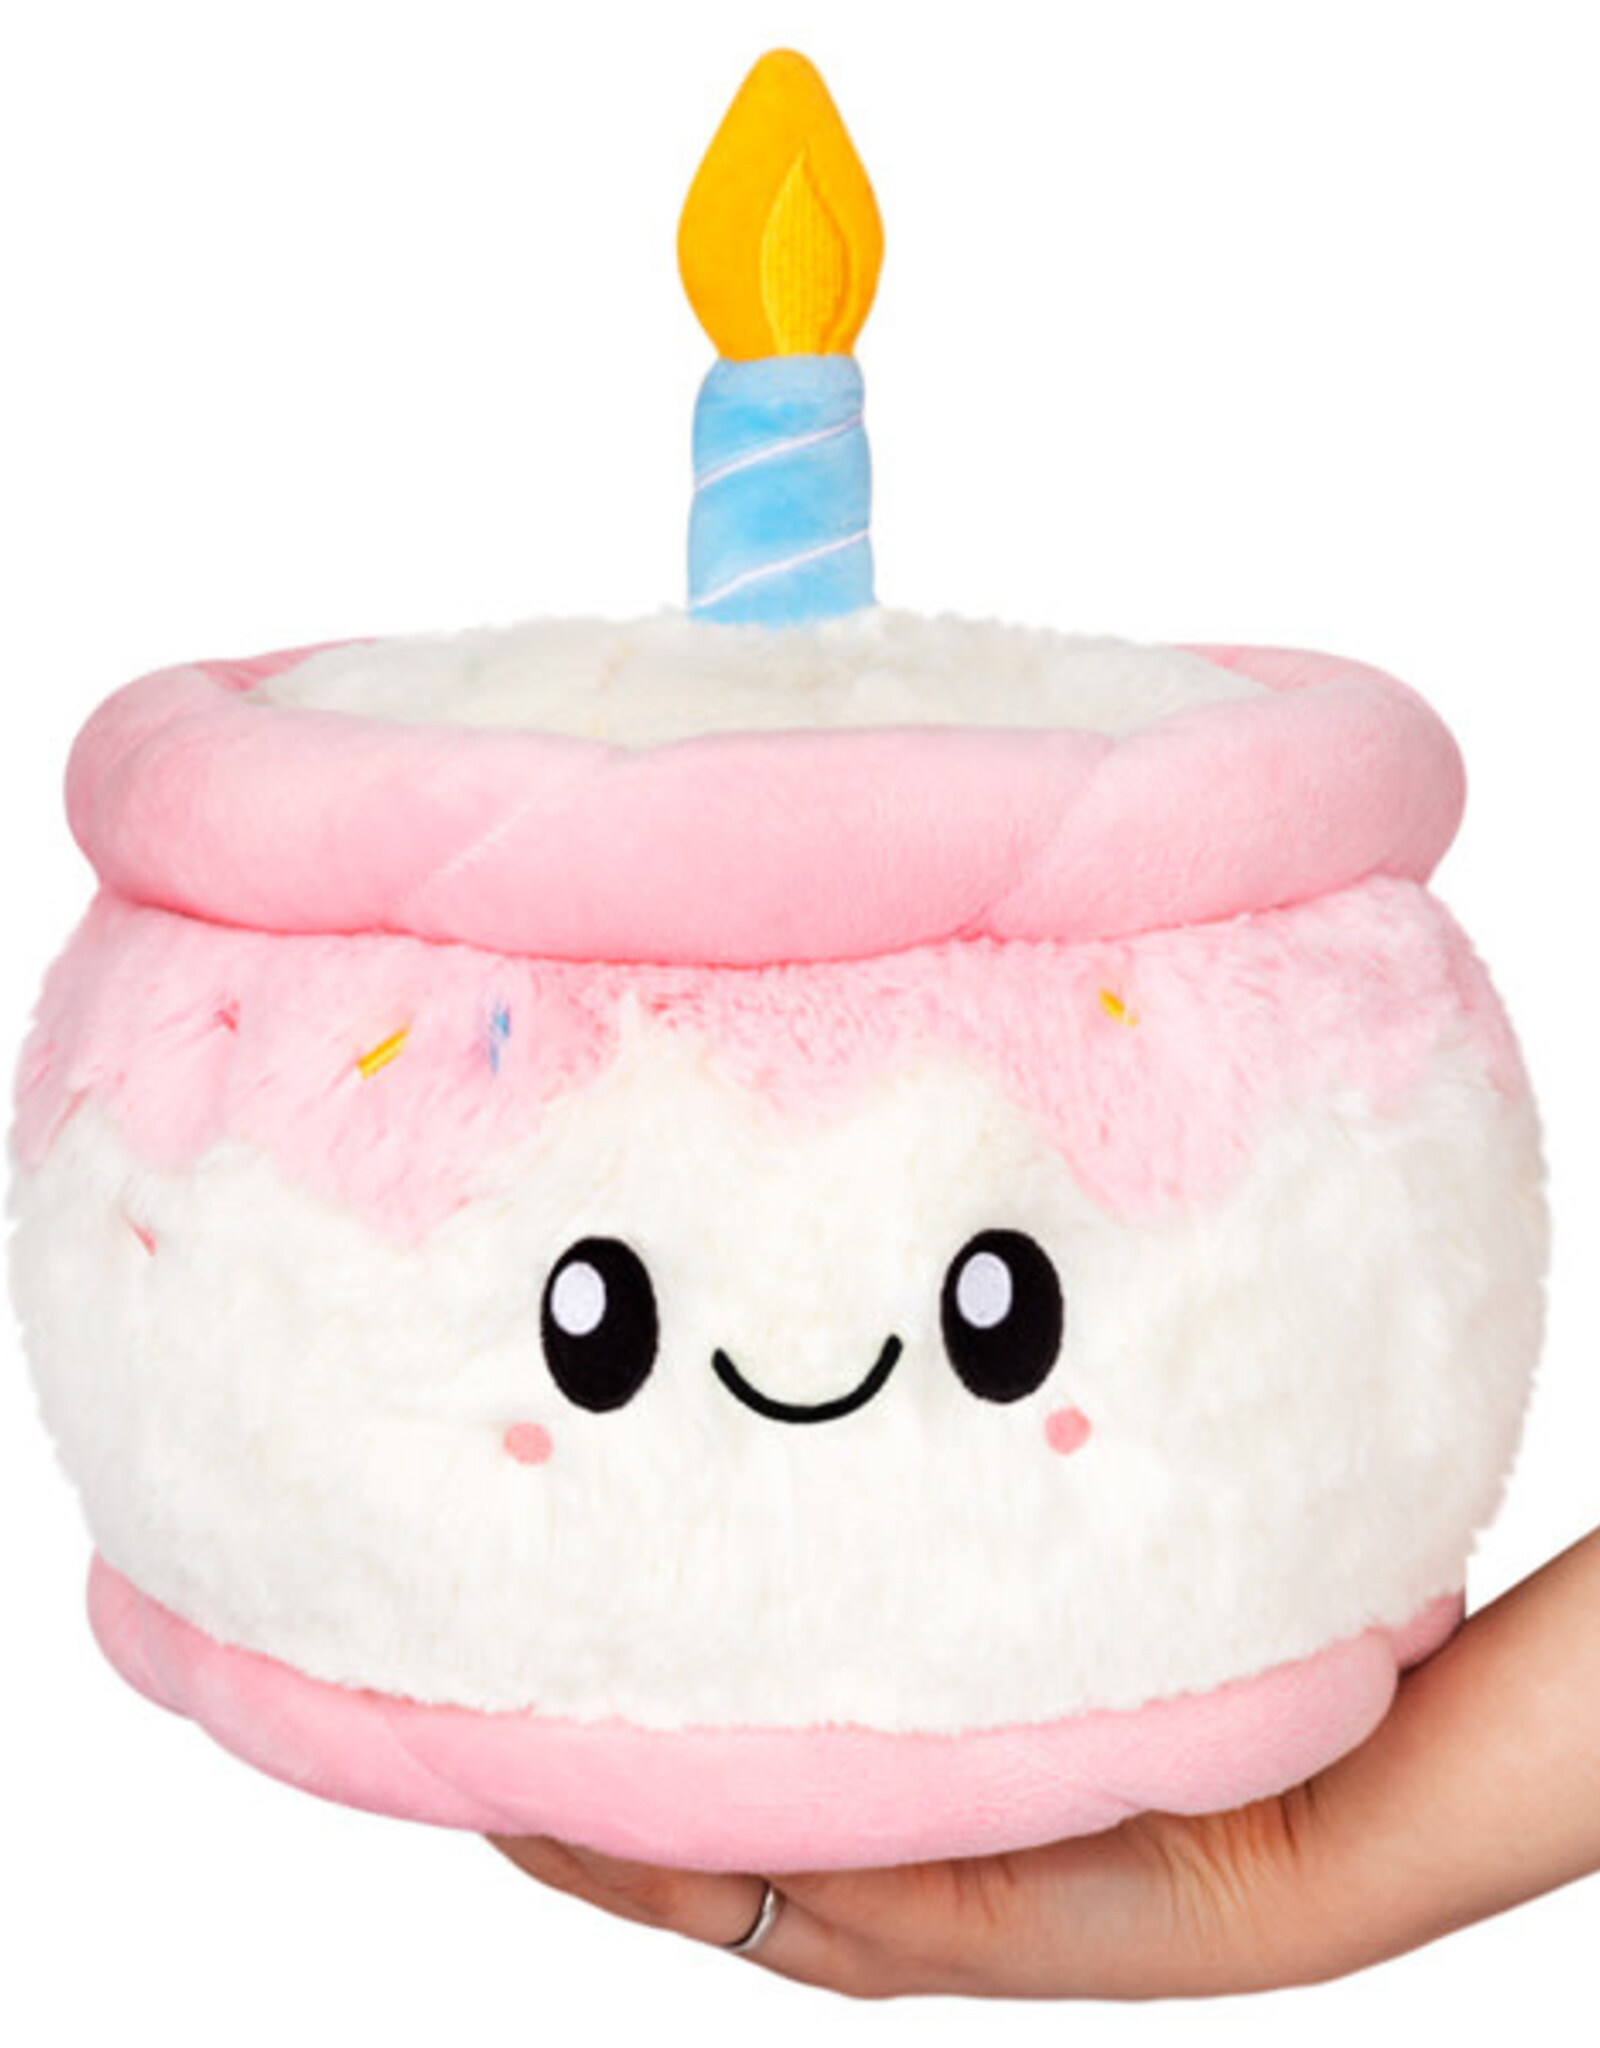 Squishable Mini Happy Birthday Cake